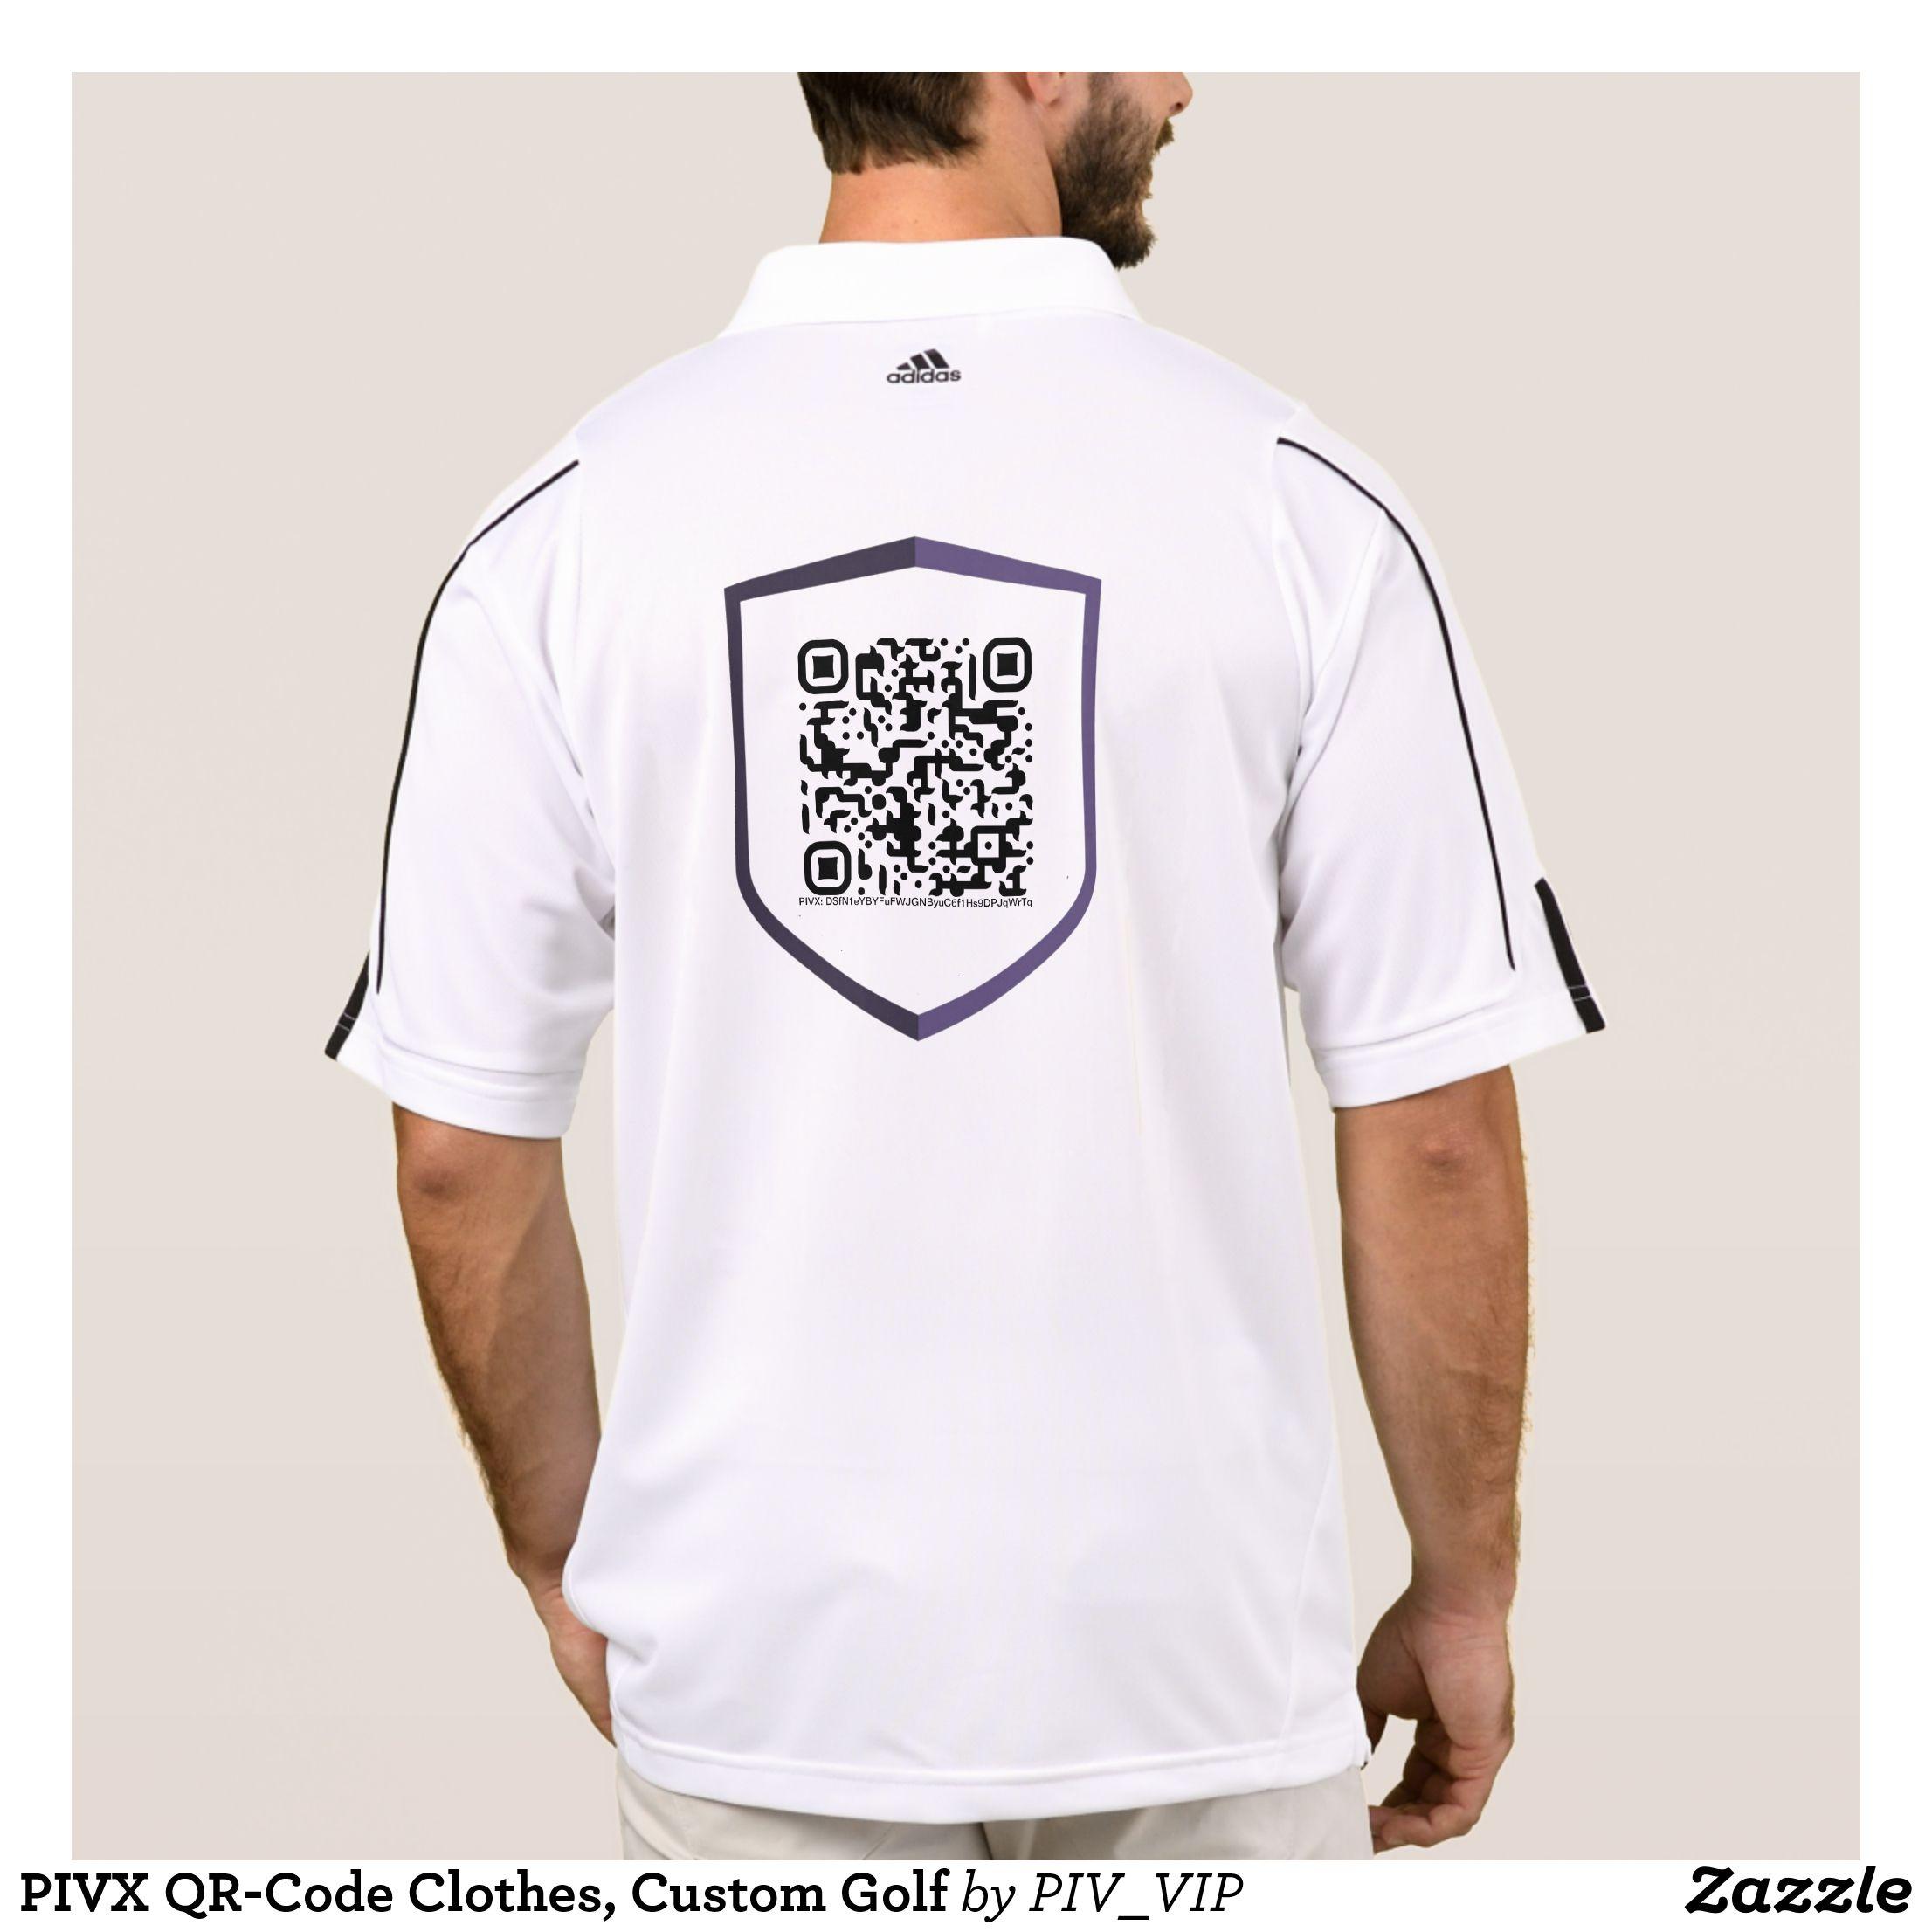 QR Clothing and Apparel Logo - PIVX QR Clothes, Color Shield, Colar Polo Shirt. MEN'S POLO SHIRTS